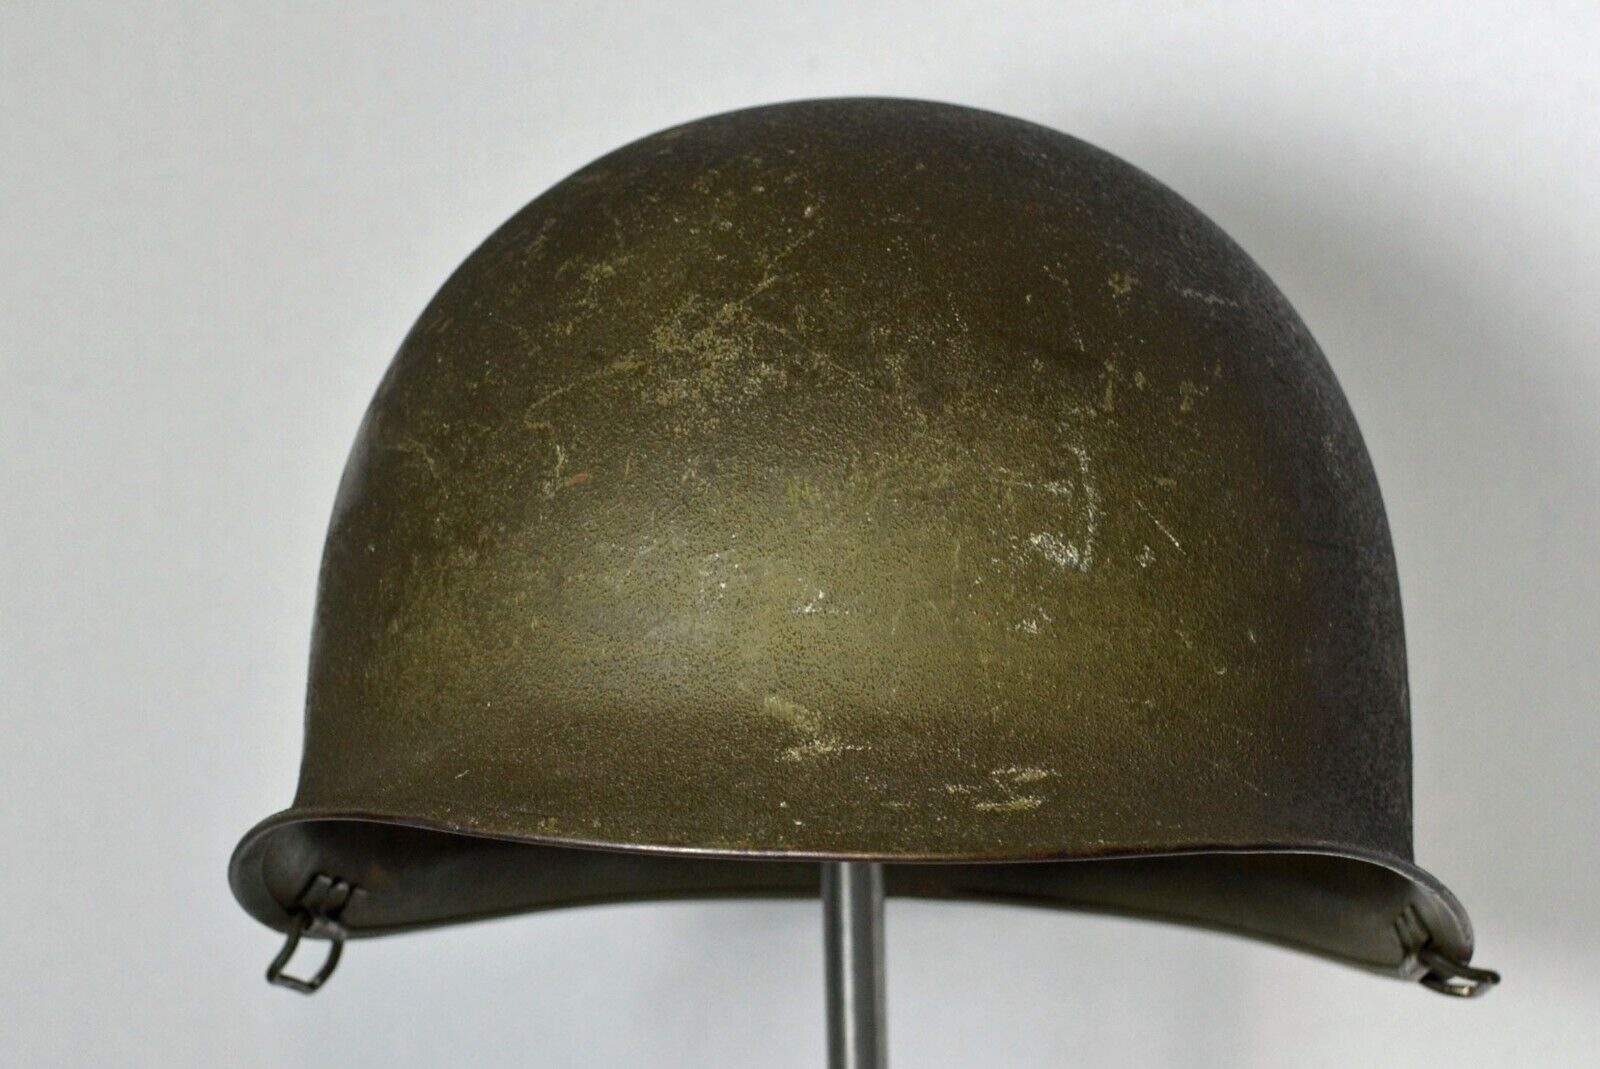 U.S. Late WWII / Korea / Vietnam McCord M1 Helmet Shell